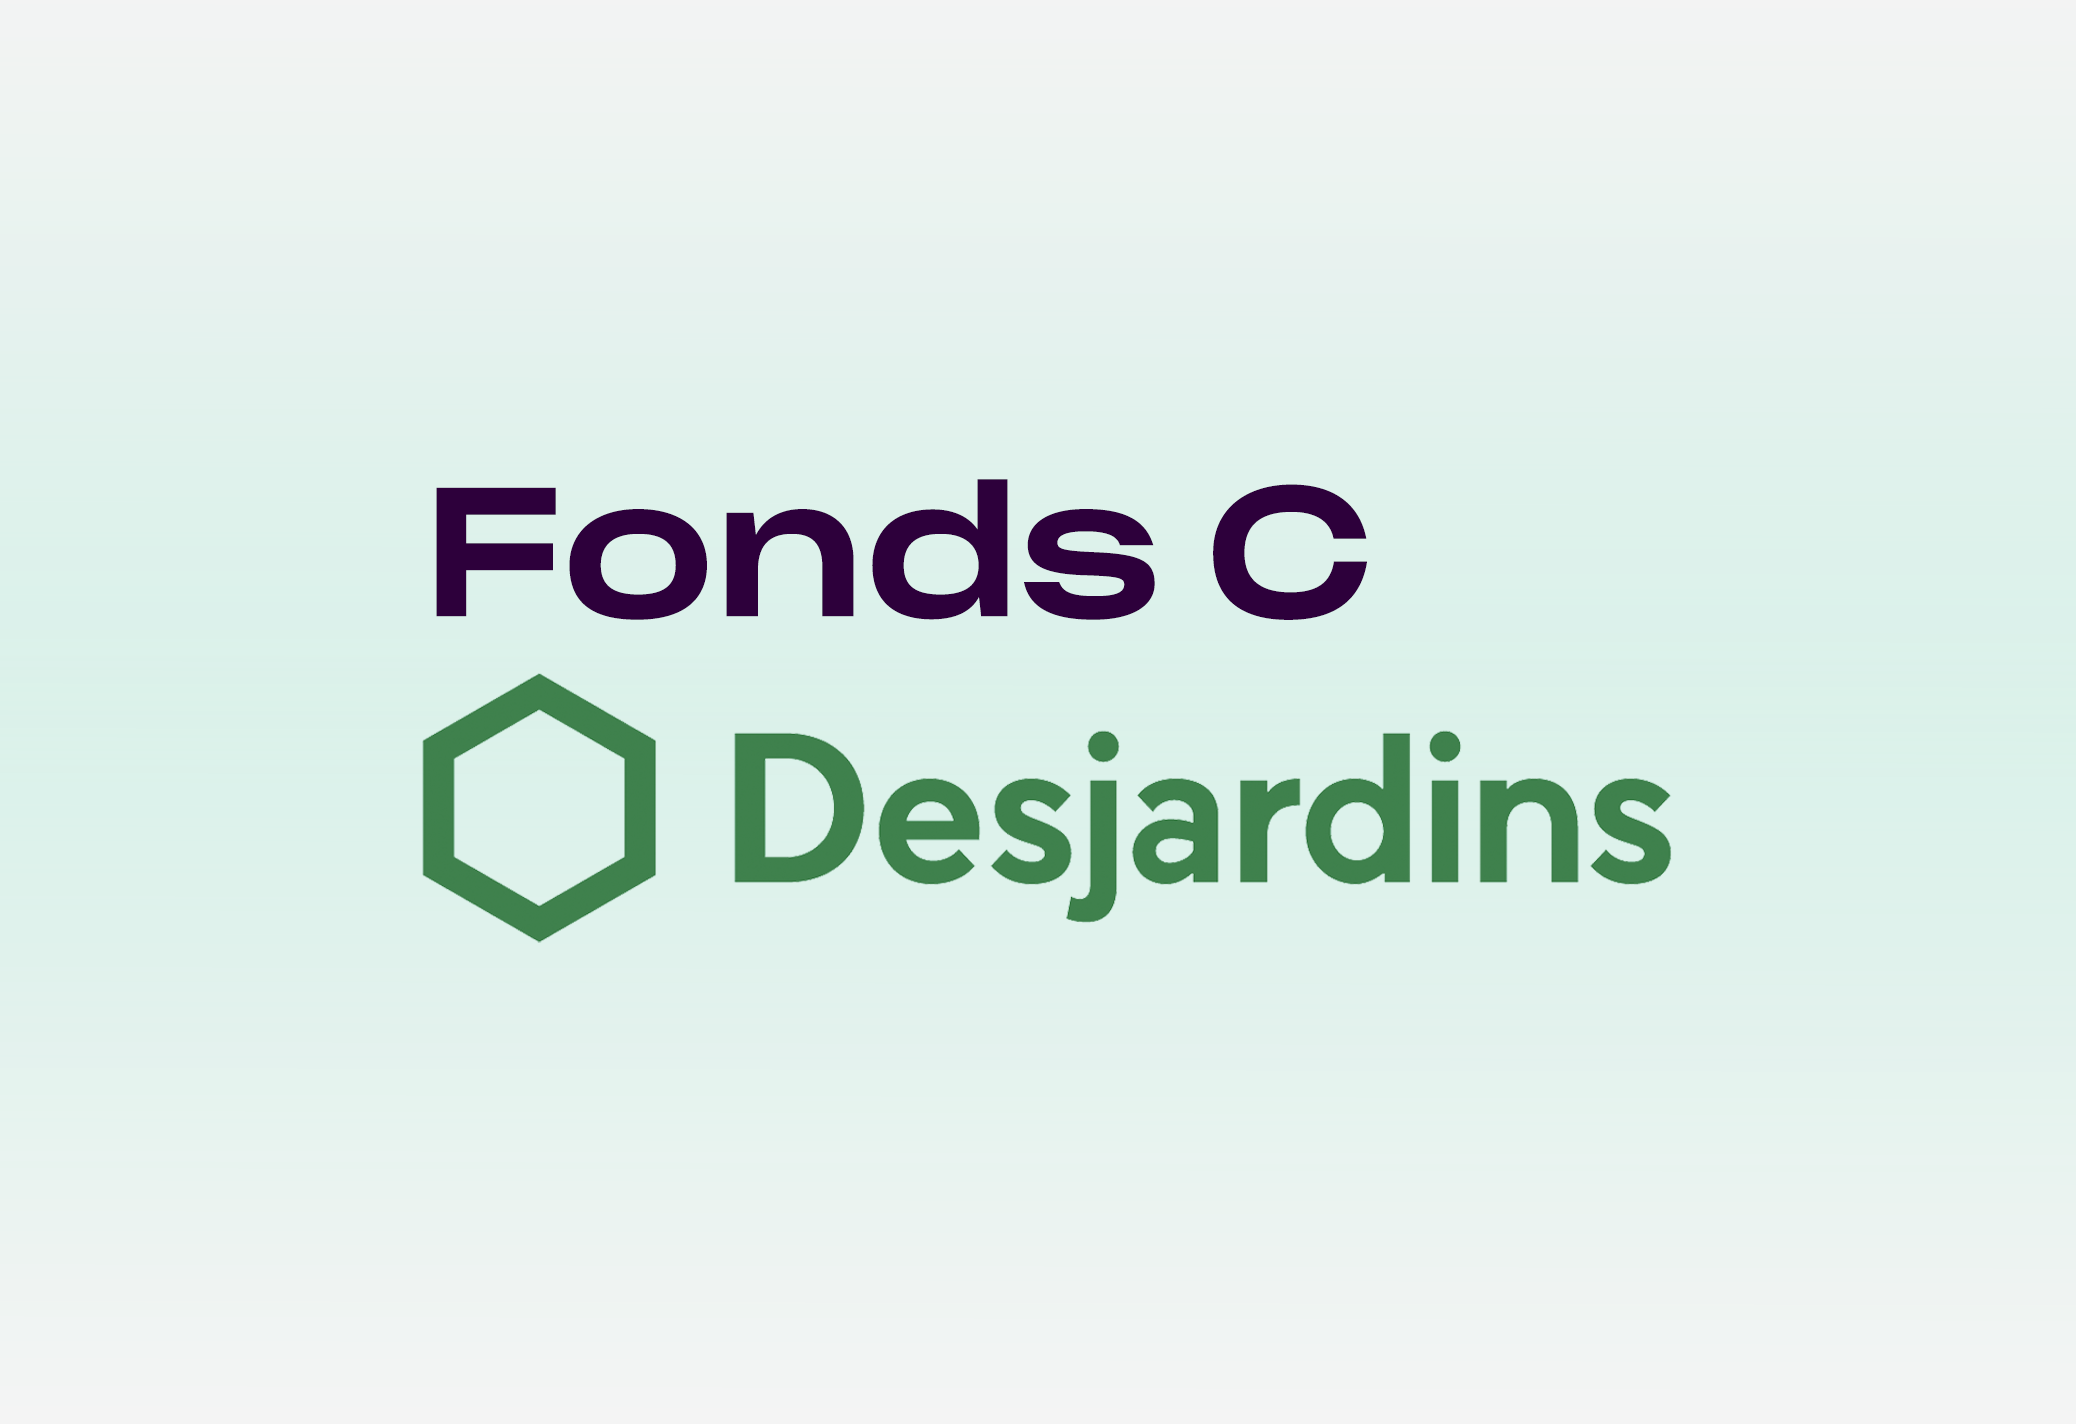 Desjardins-logos-Fond C